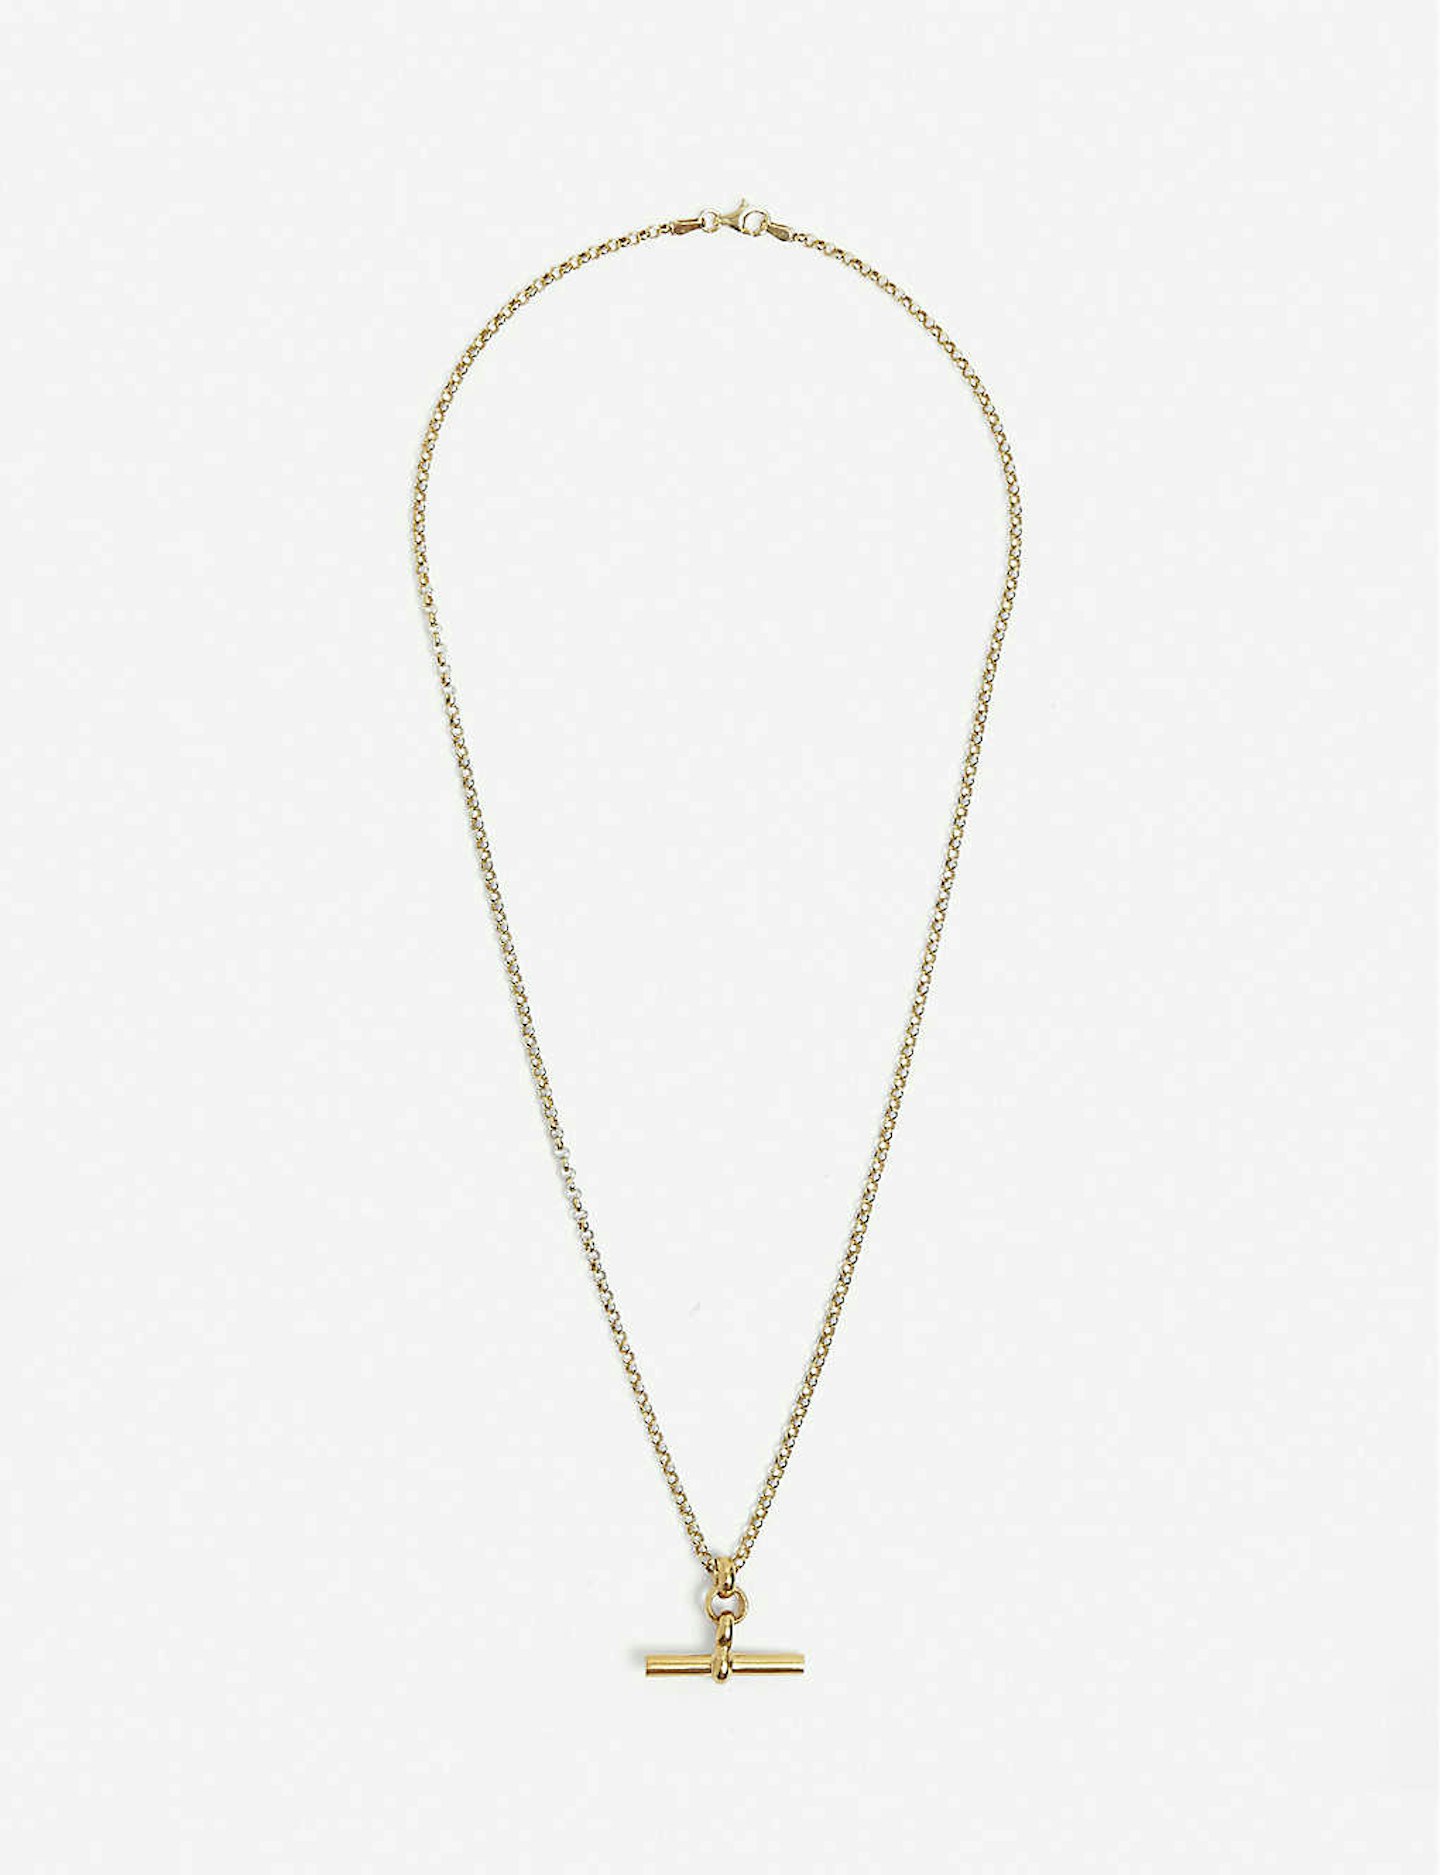 Tilly Sveaas, T-Bar Gold-Plated Sterling Silver Belcher Necklace, £100